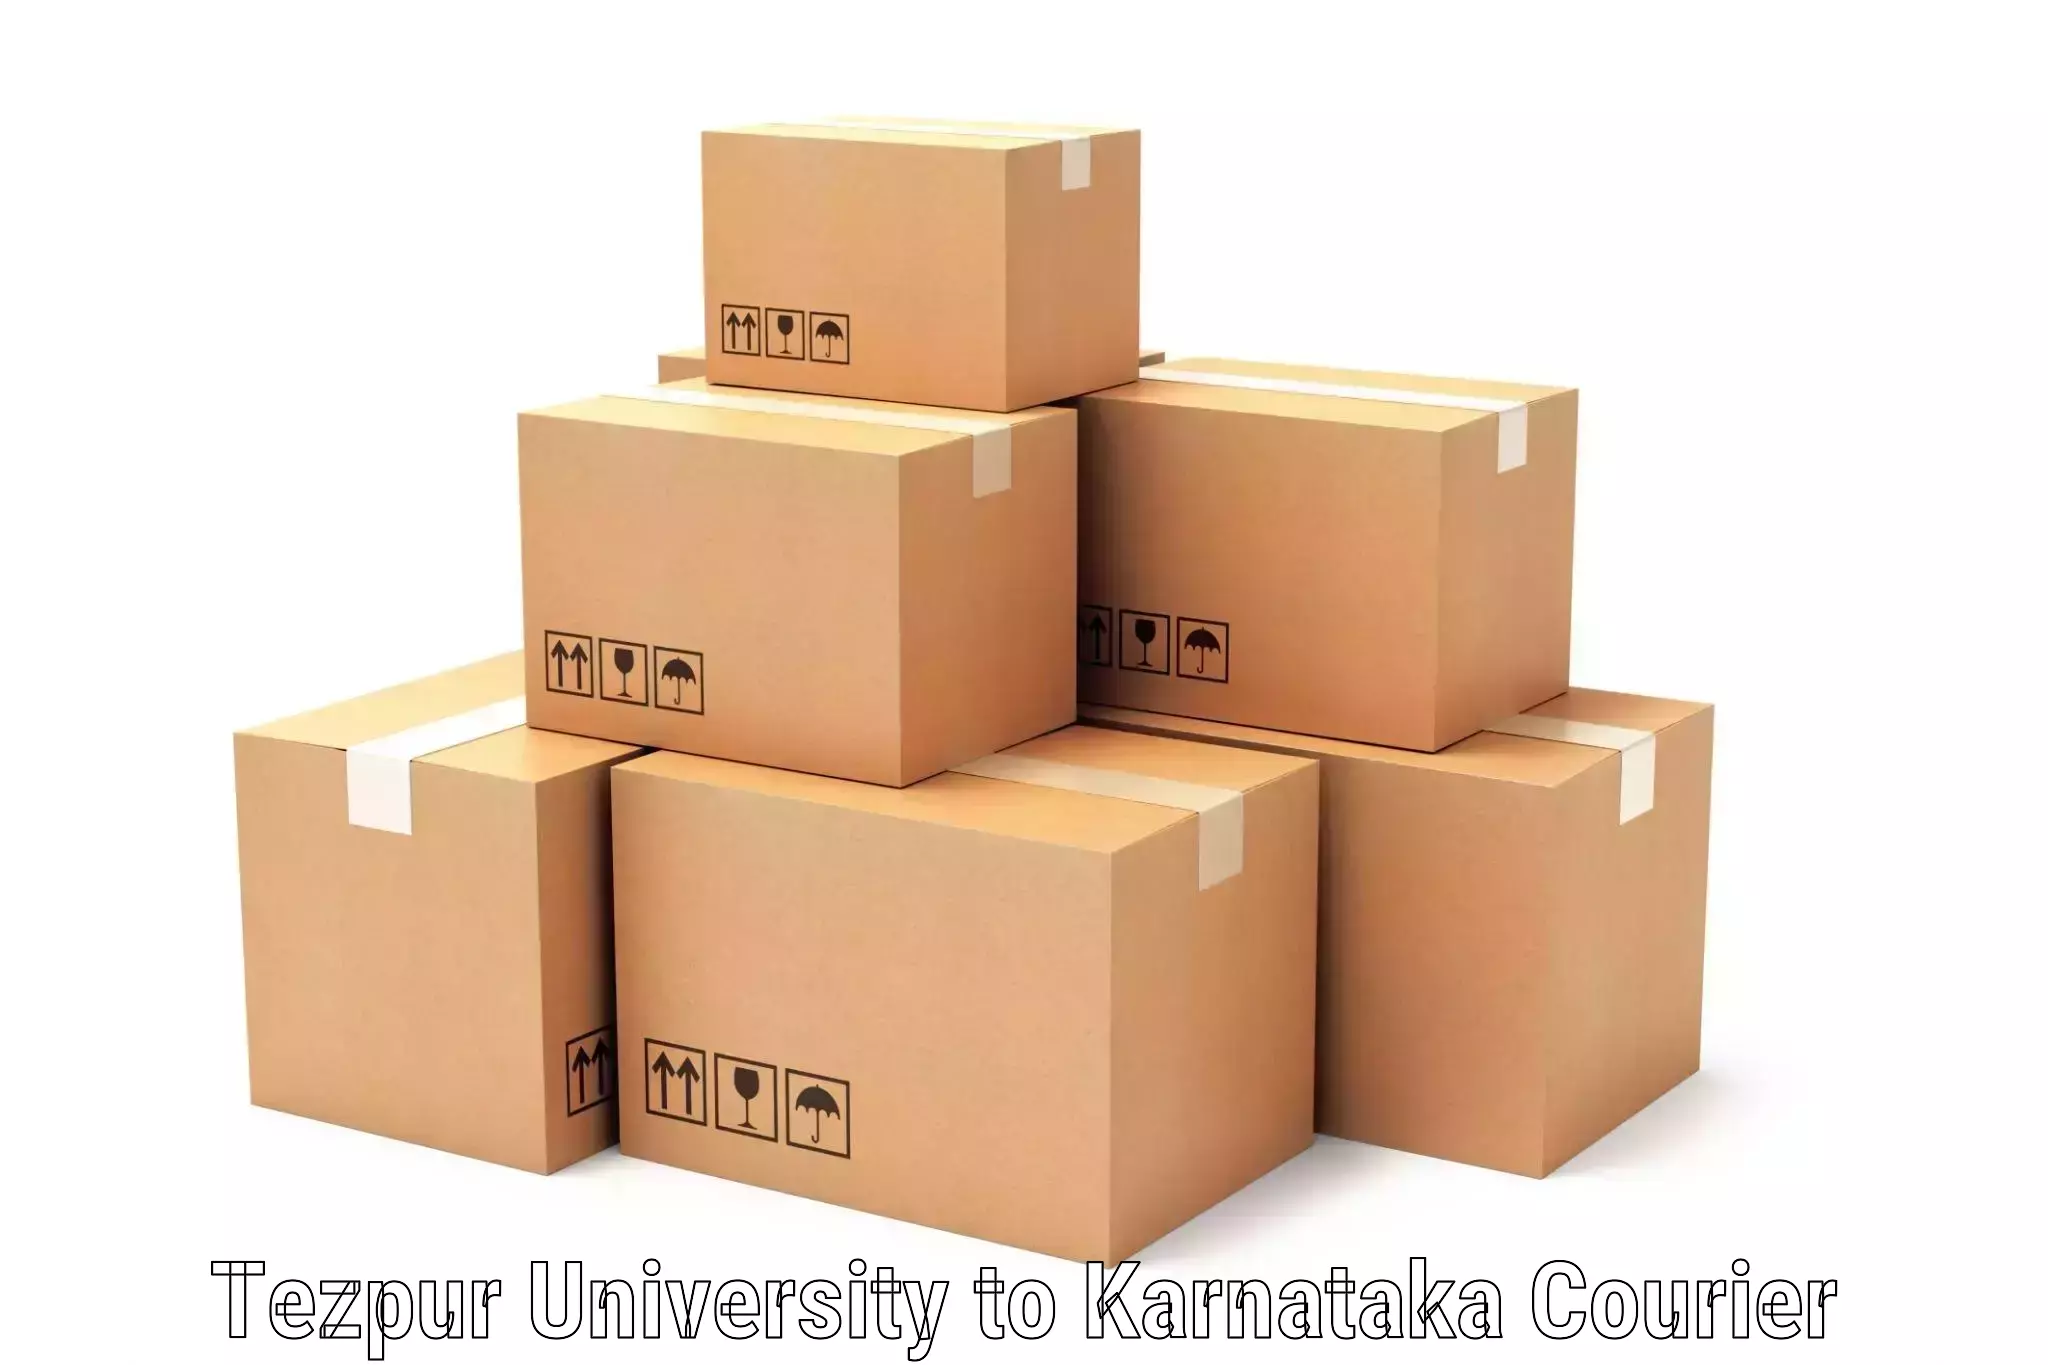 Express package services in Tezpur University to Aland Kalaburagi